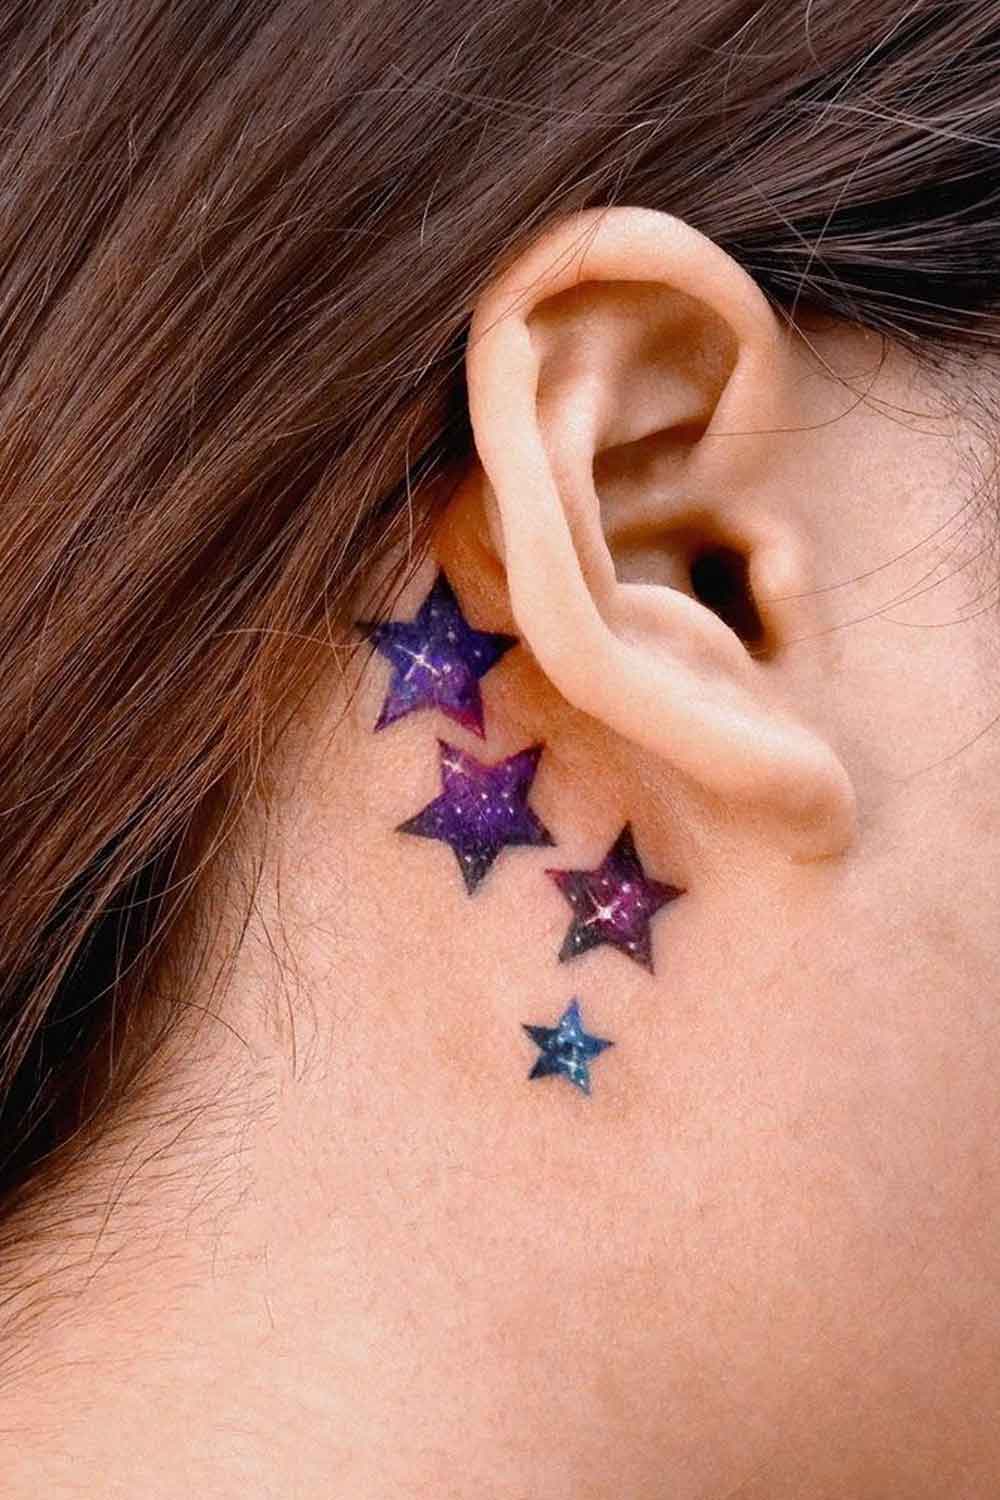 Star Tattoos Behind The Ear